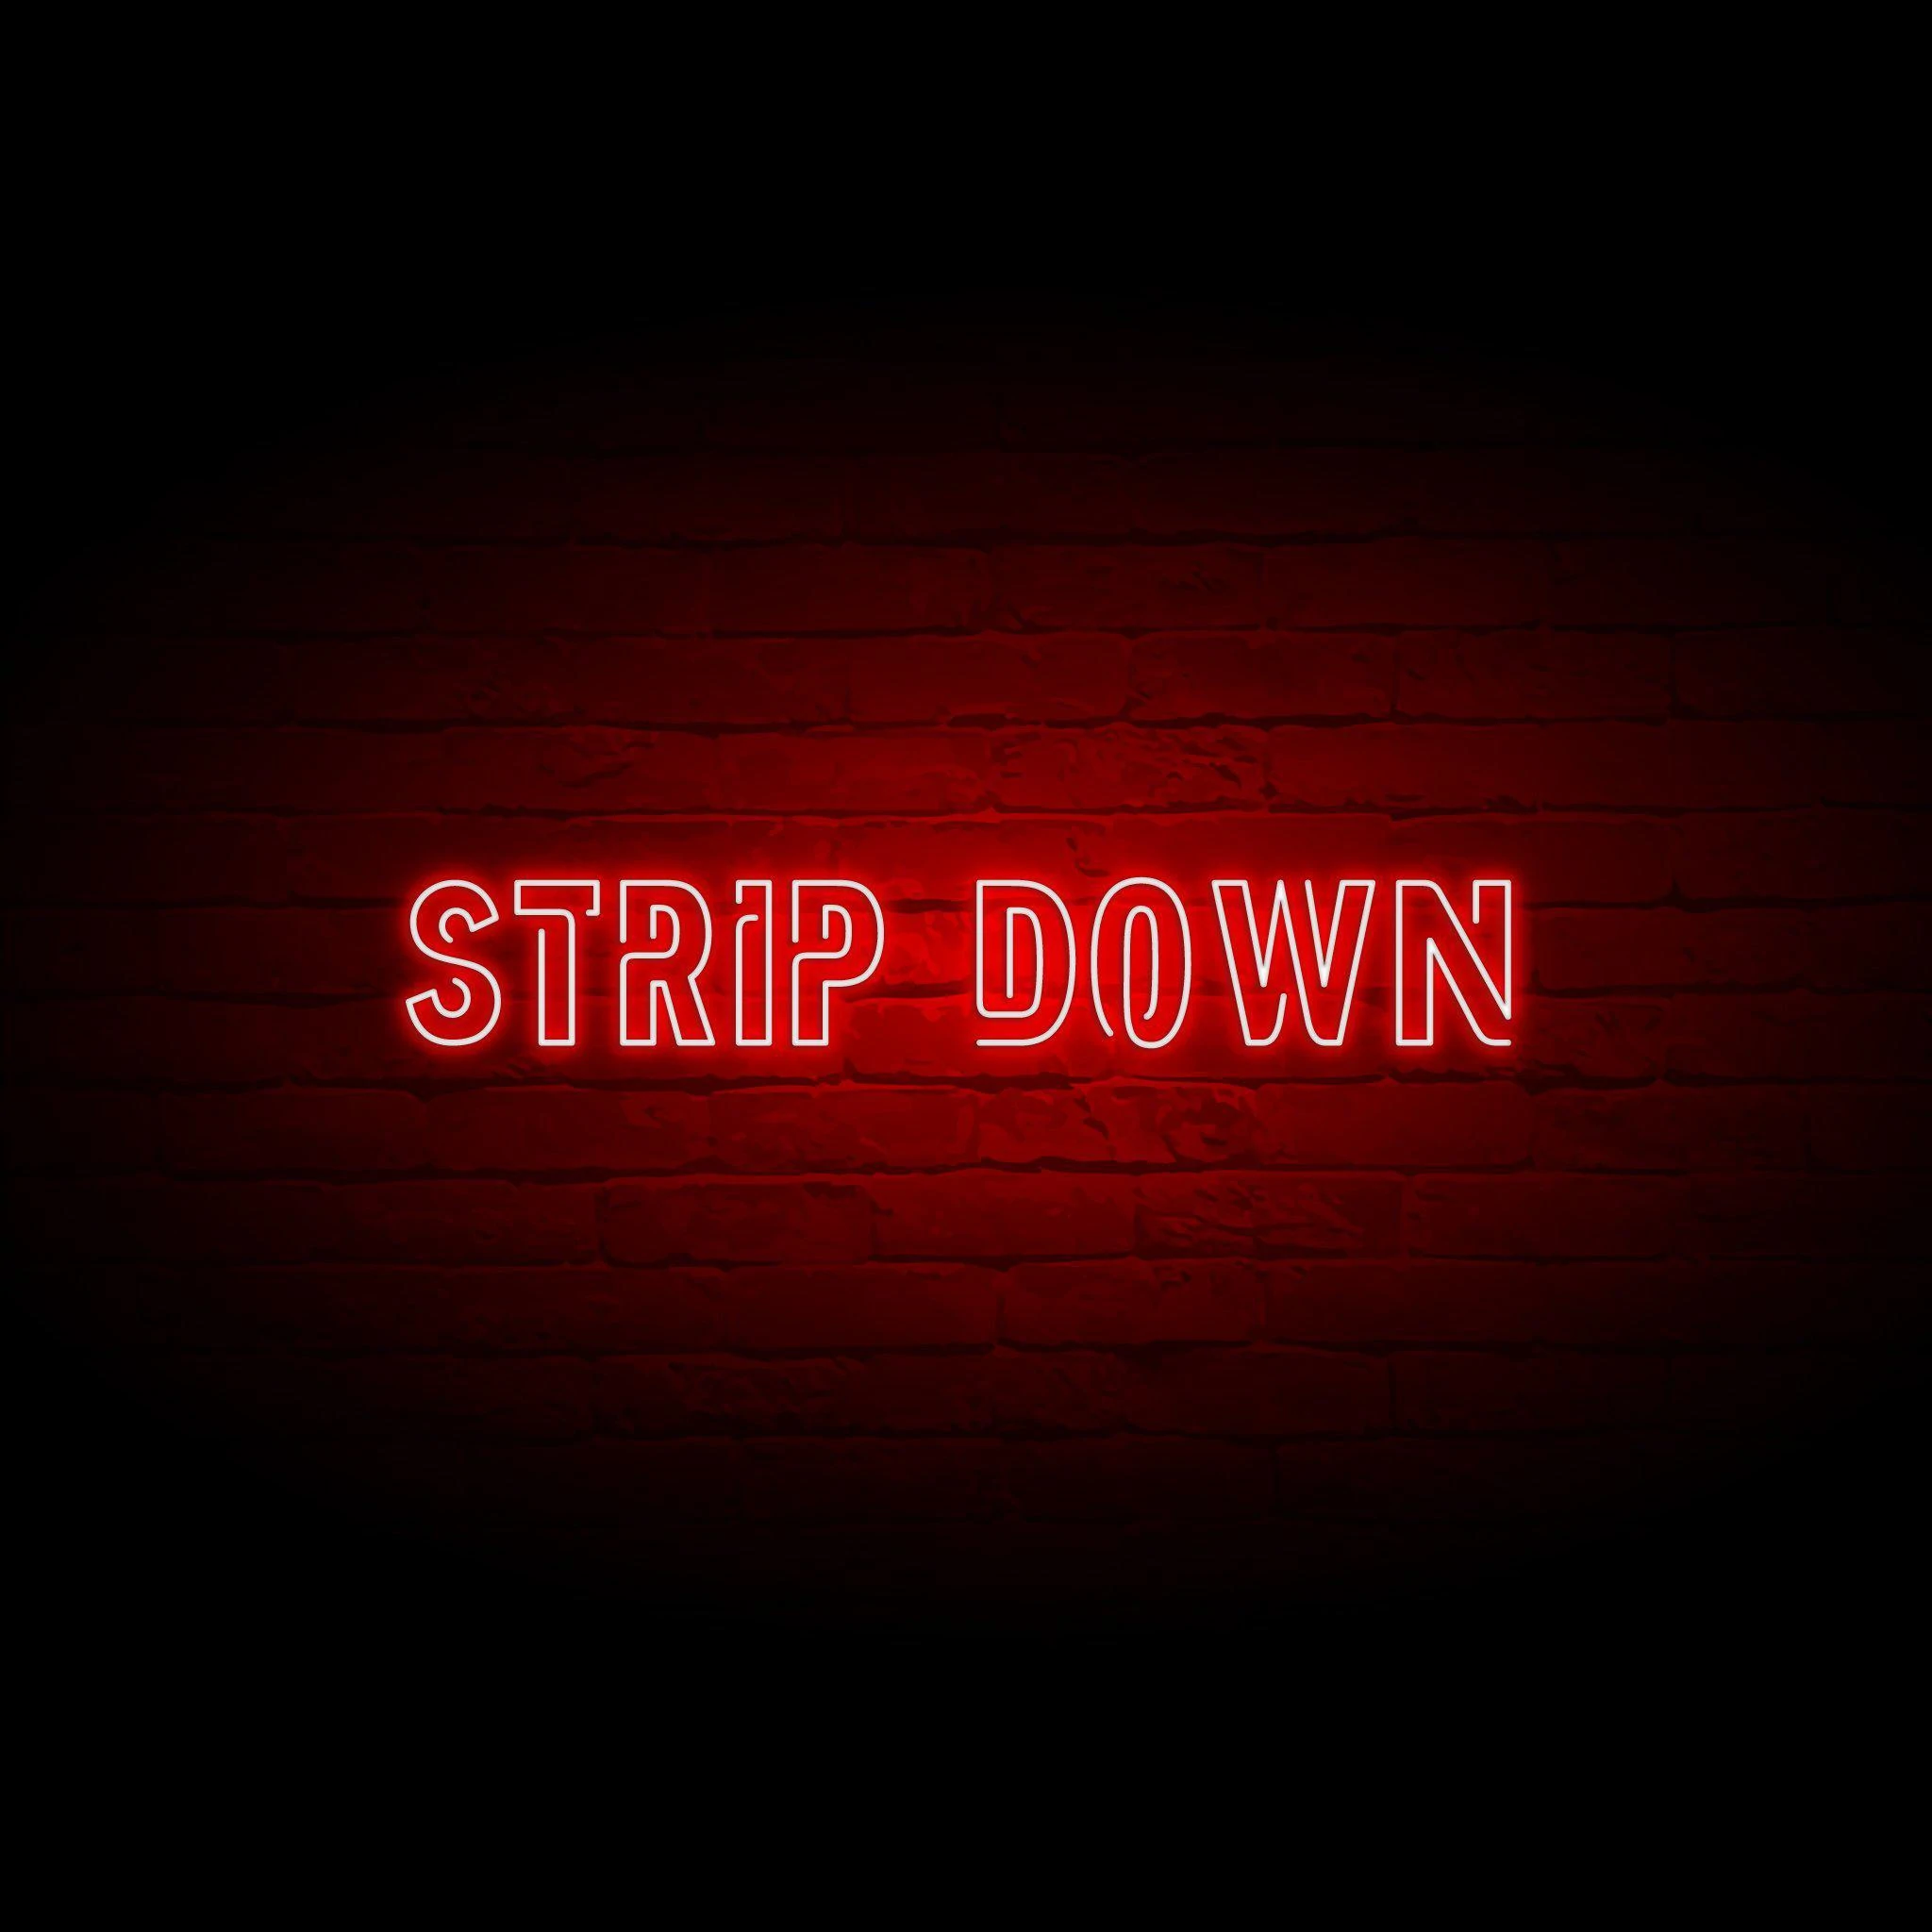 'STRIP DOWN' NEON SIGN